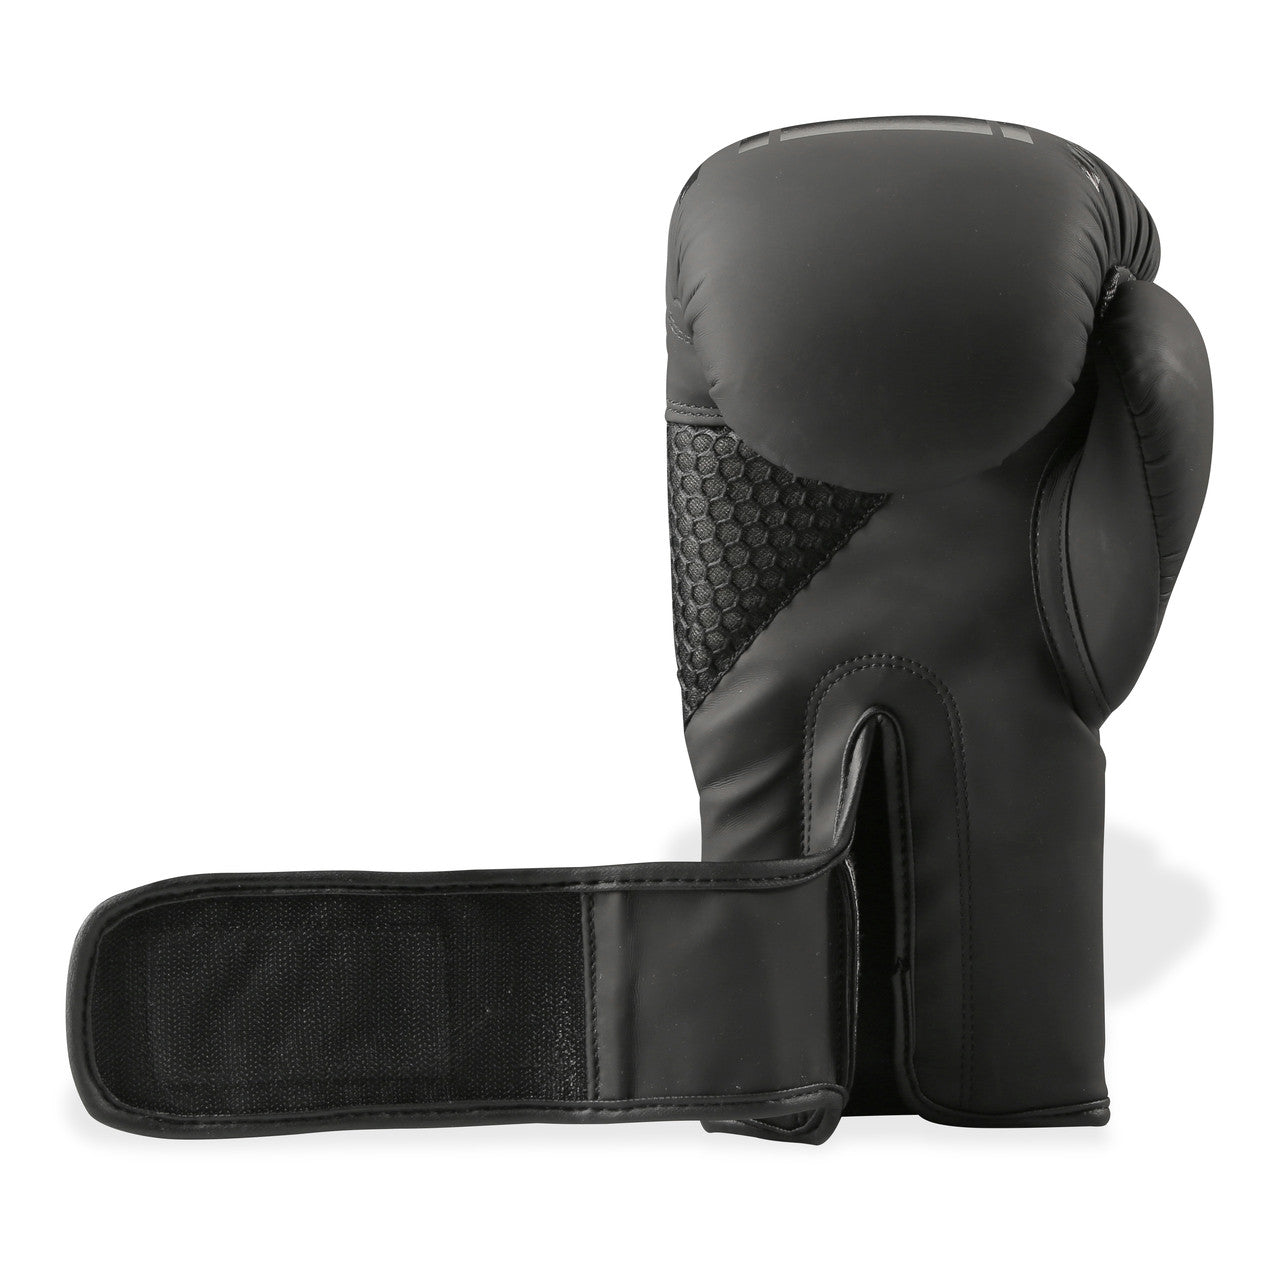 Bytomic Axis V2 Boxing Gloves Black/Black